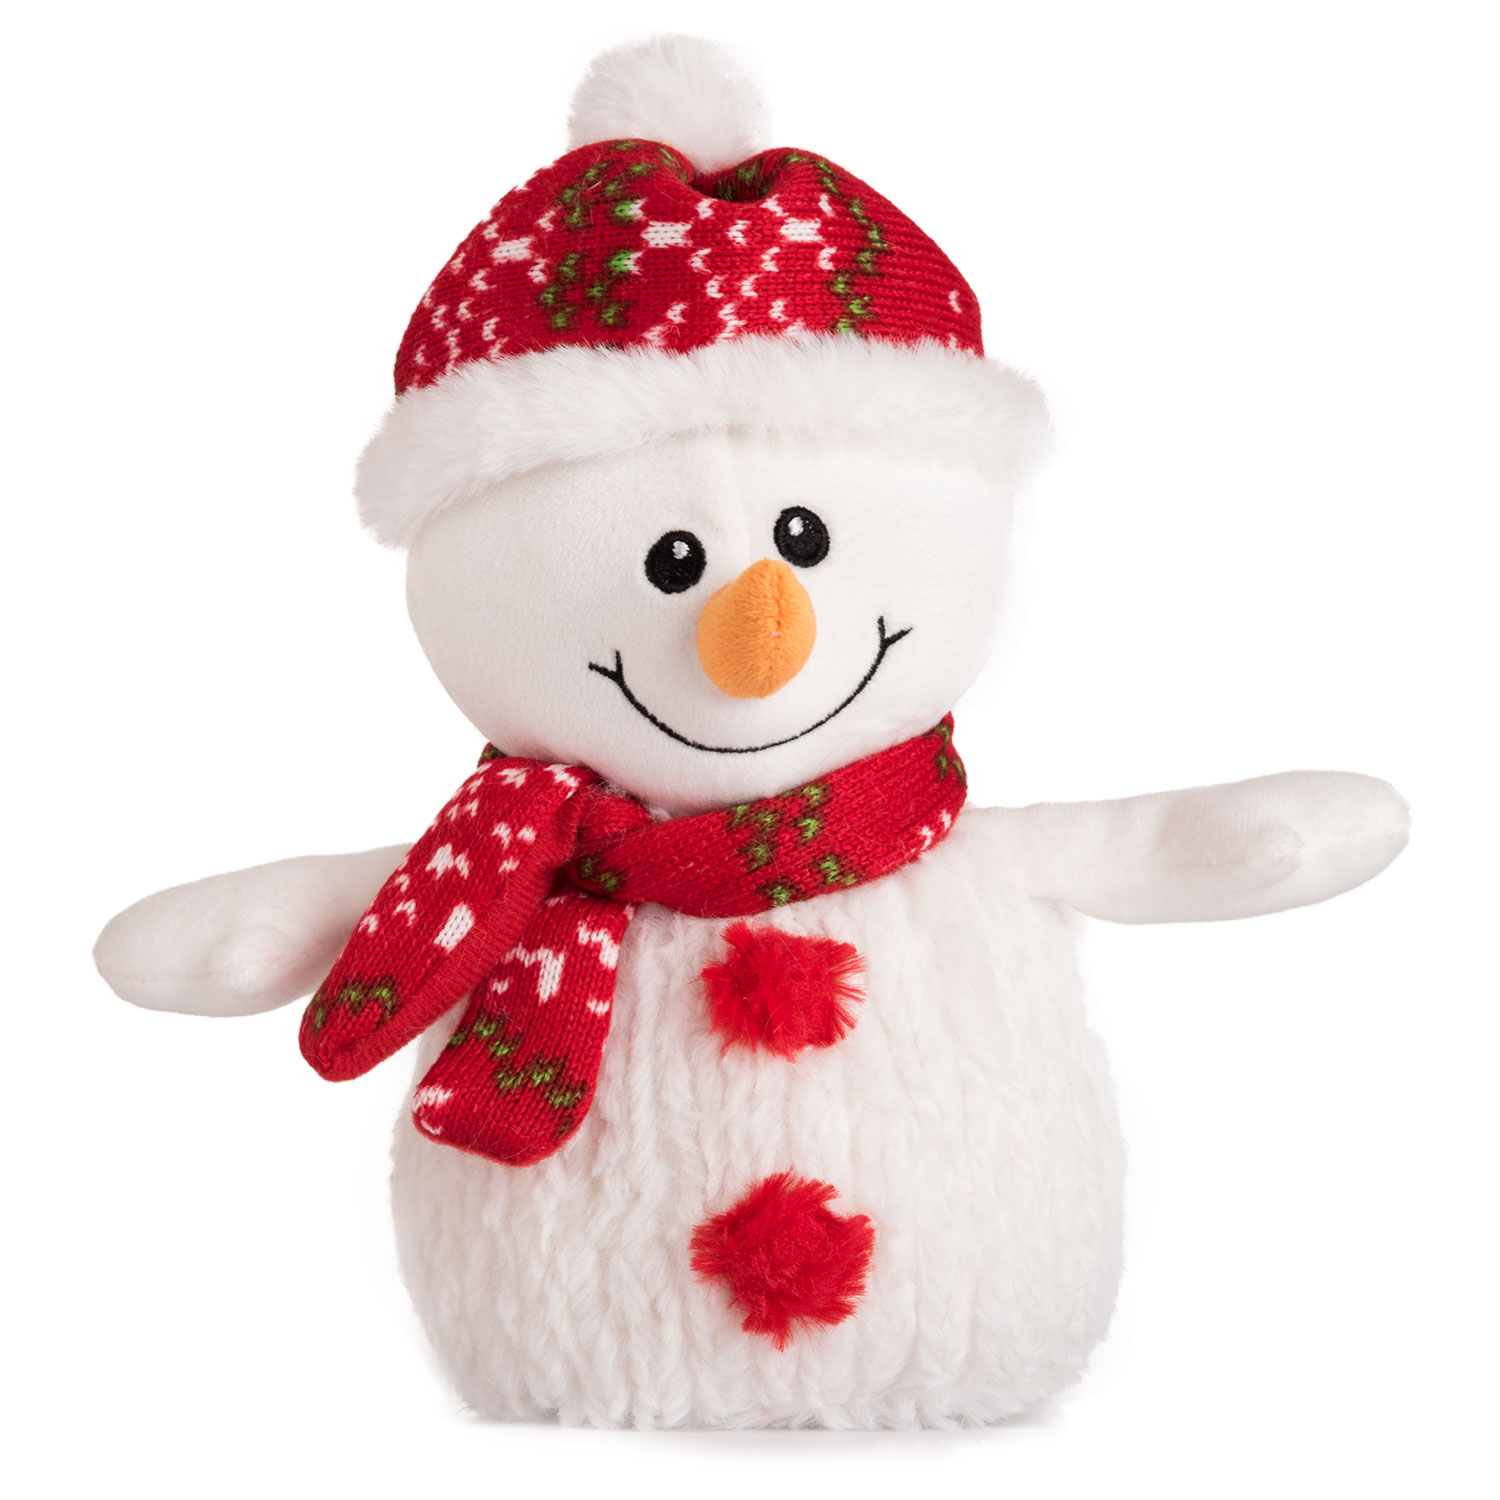 Christmas animals - Snowman